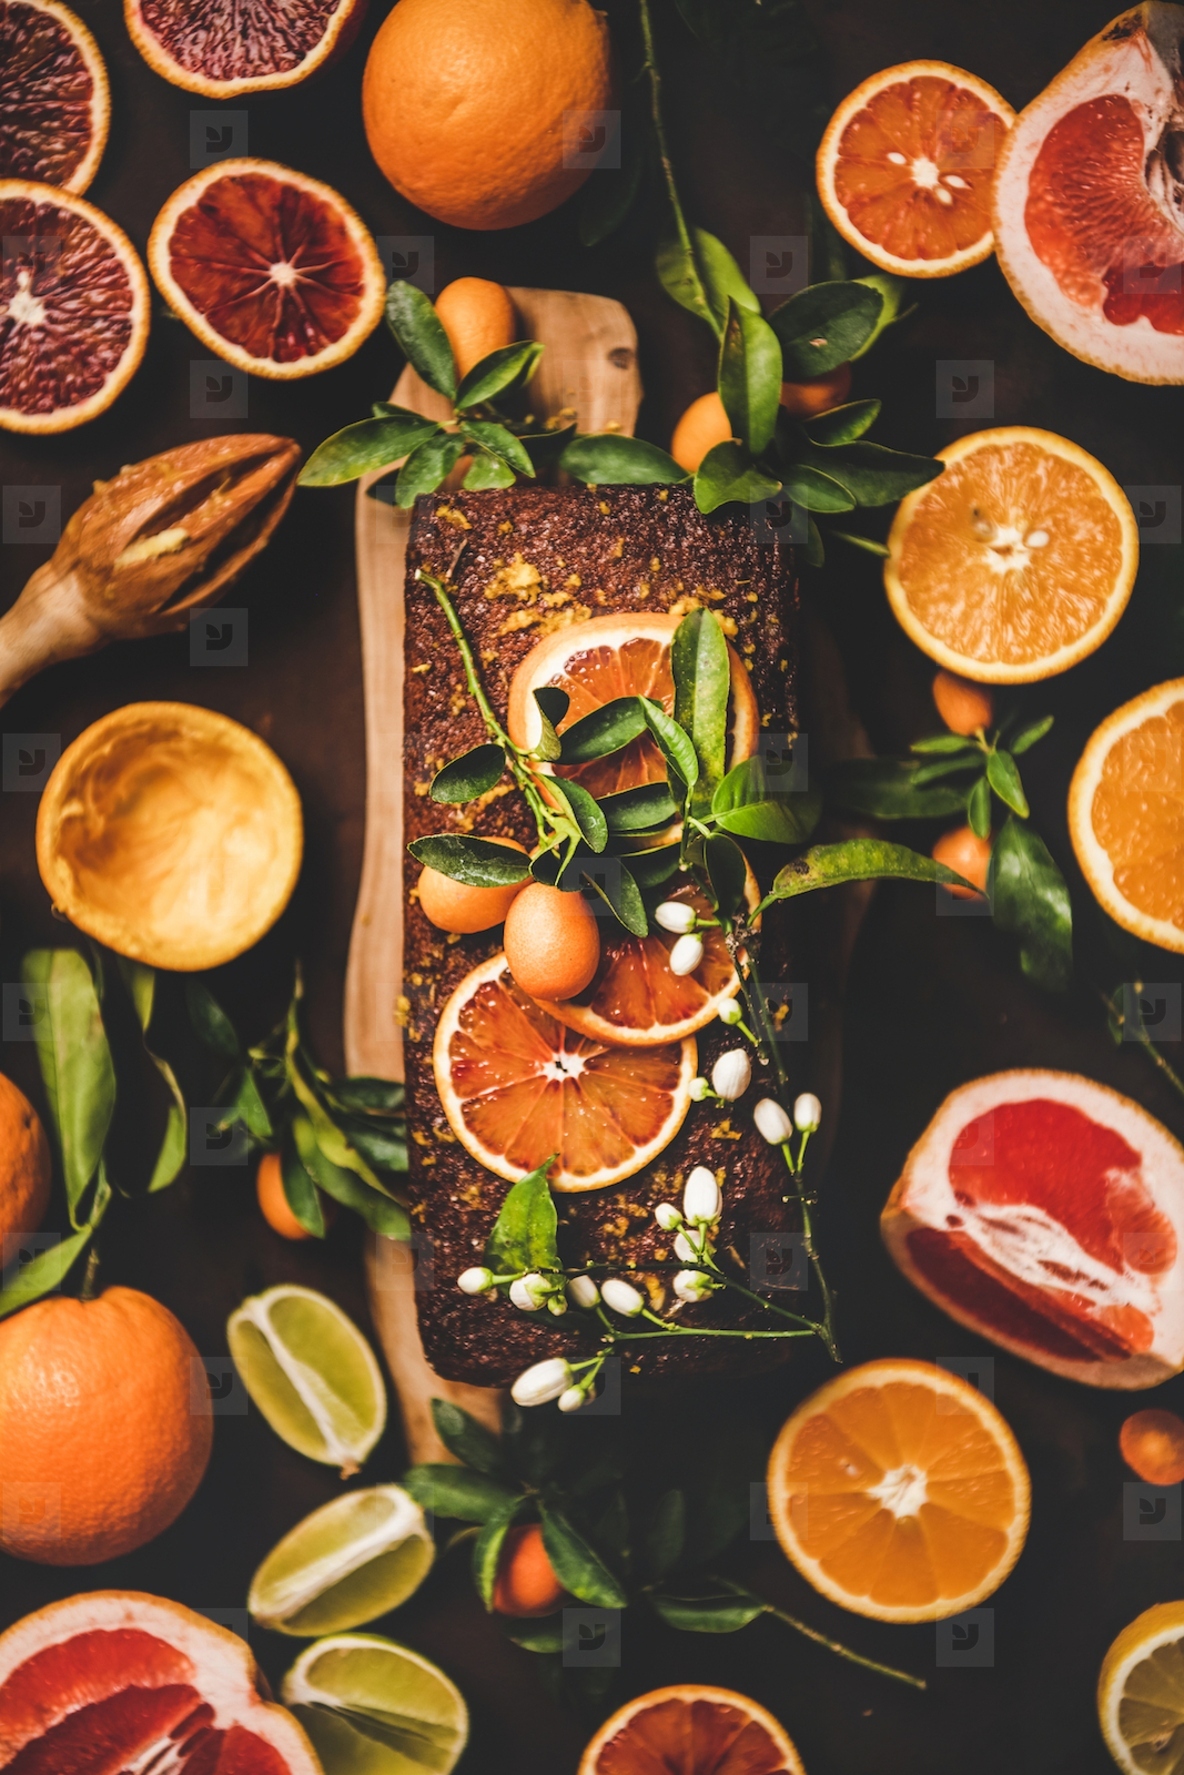 Citrus Mediterranean flourless vegan loaf cake with fresh fruits